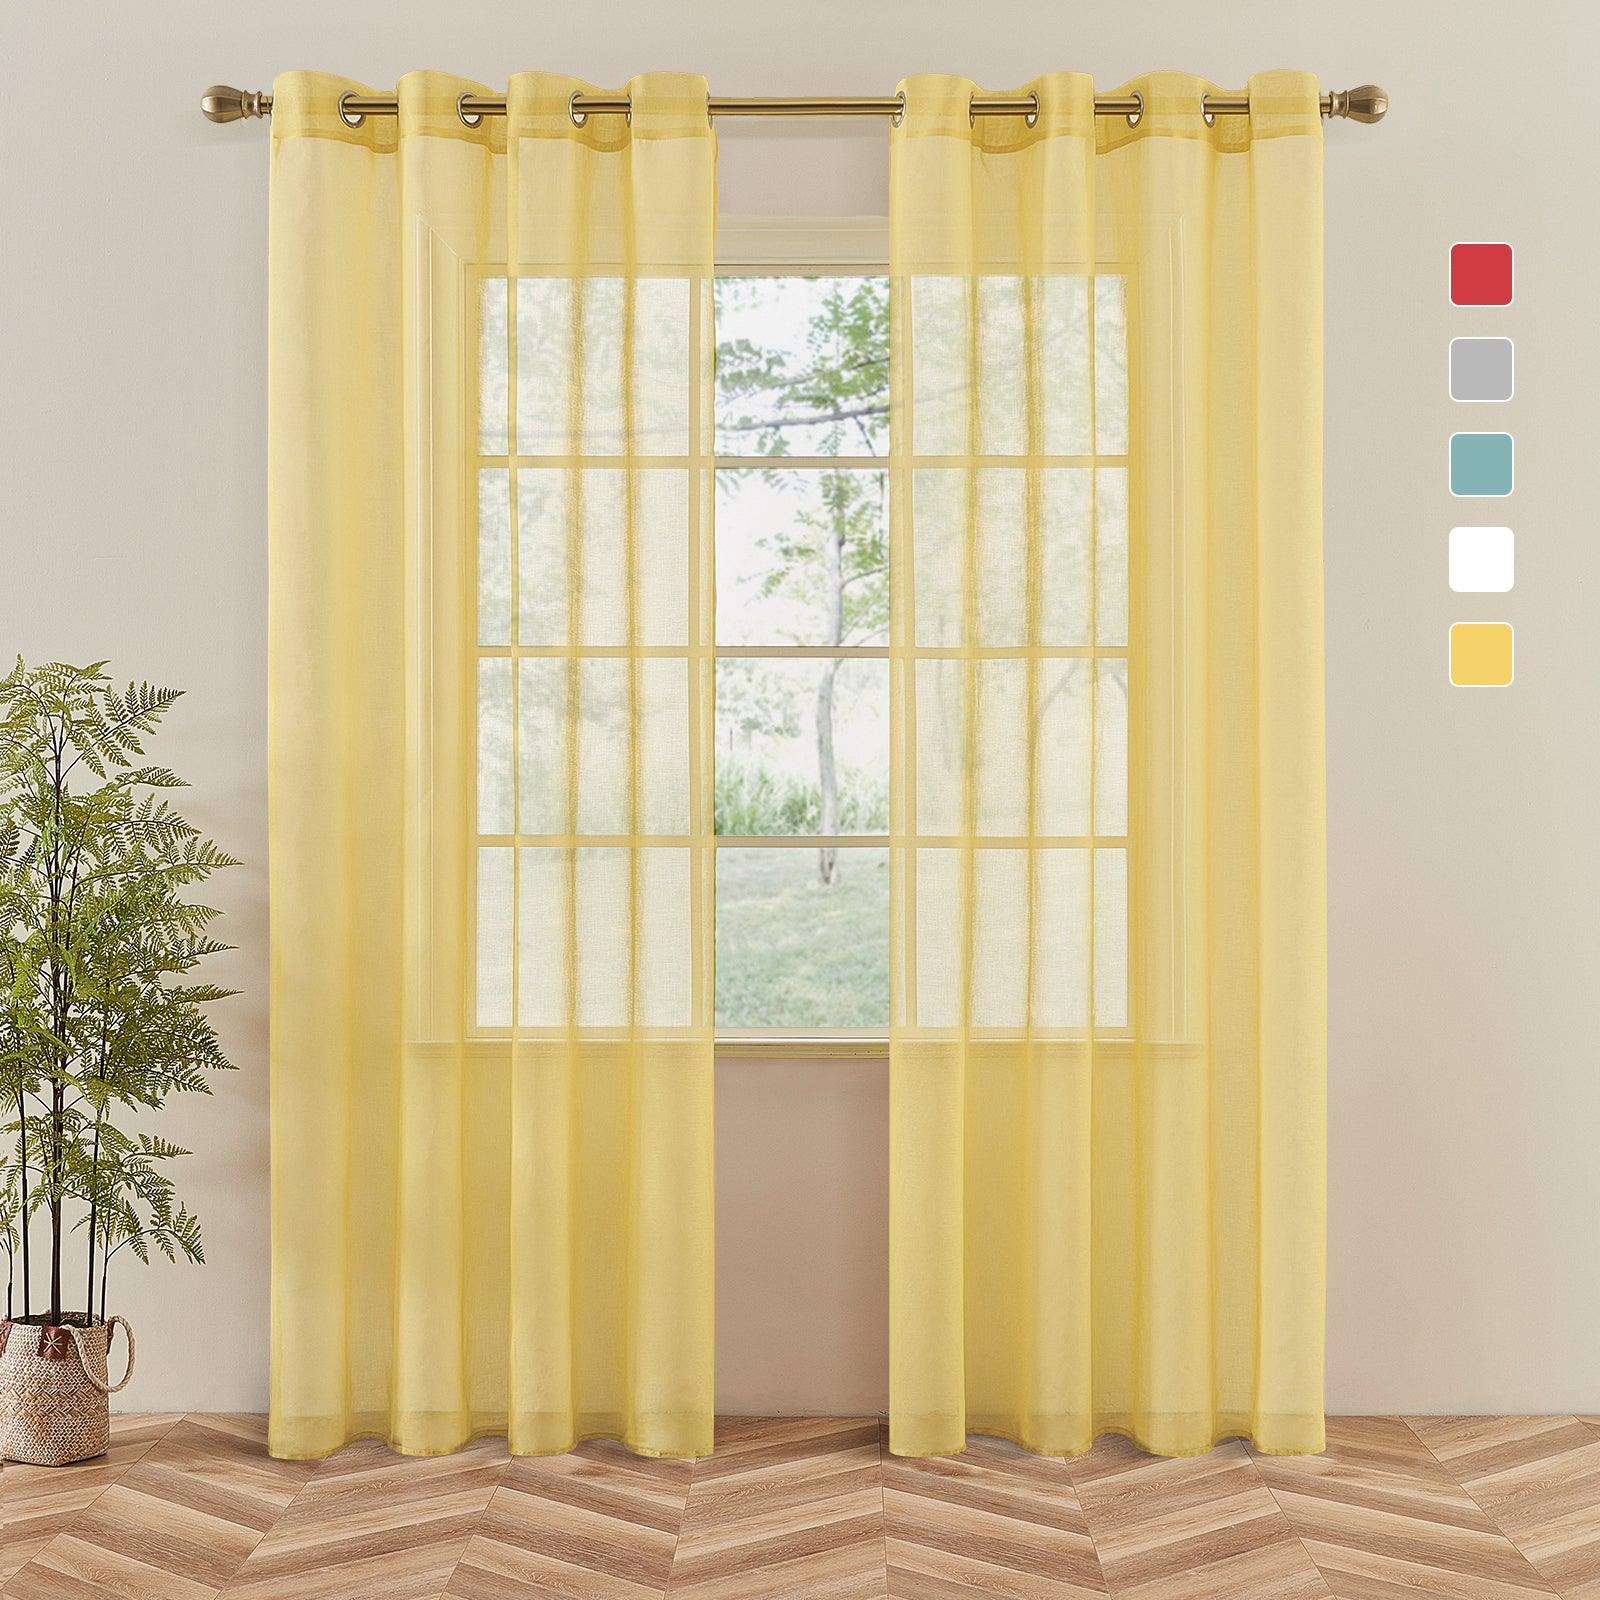 Customized Size - Chiffon White Sheer Nursery Curtain For Kitchen,1 Panel - Topfinel